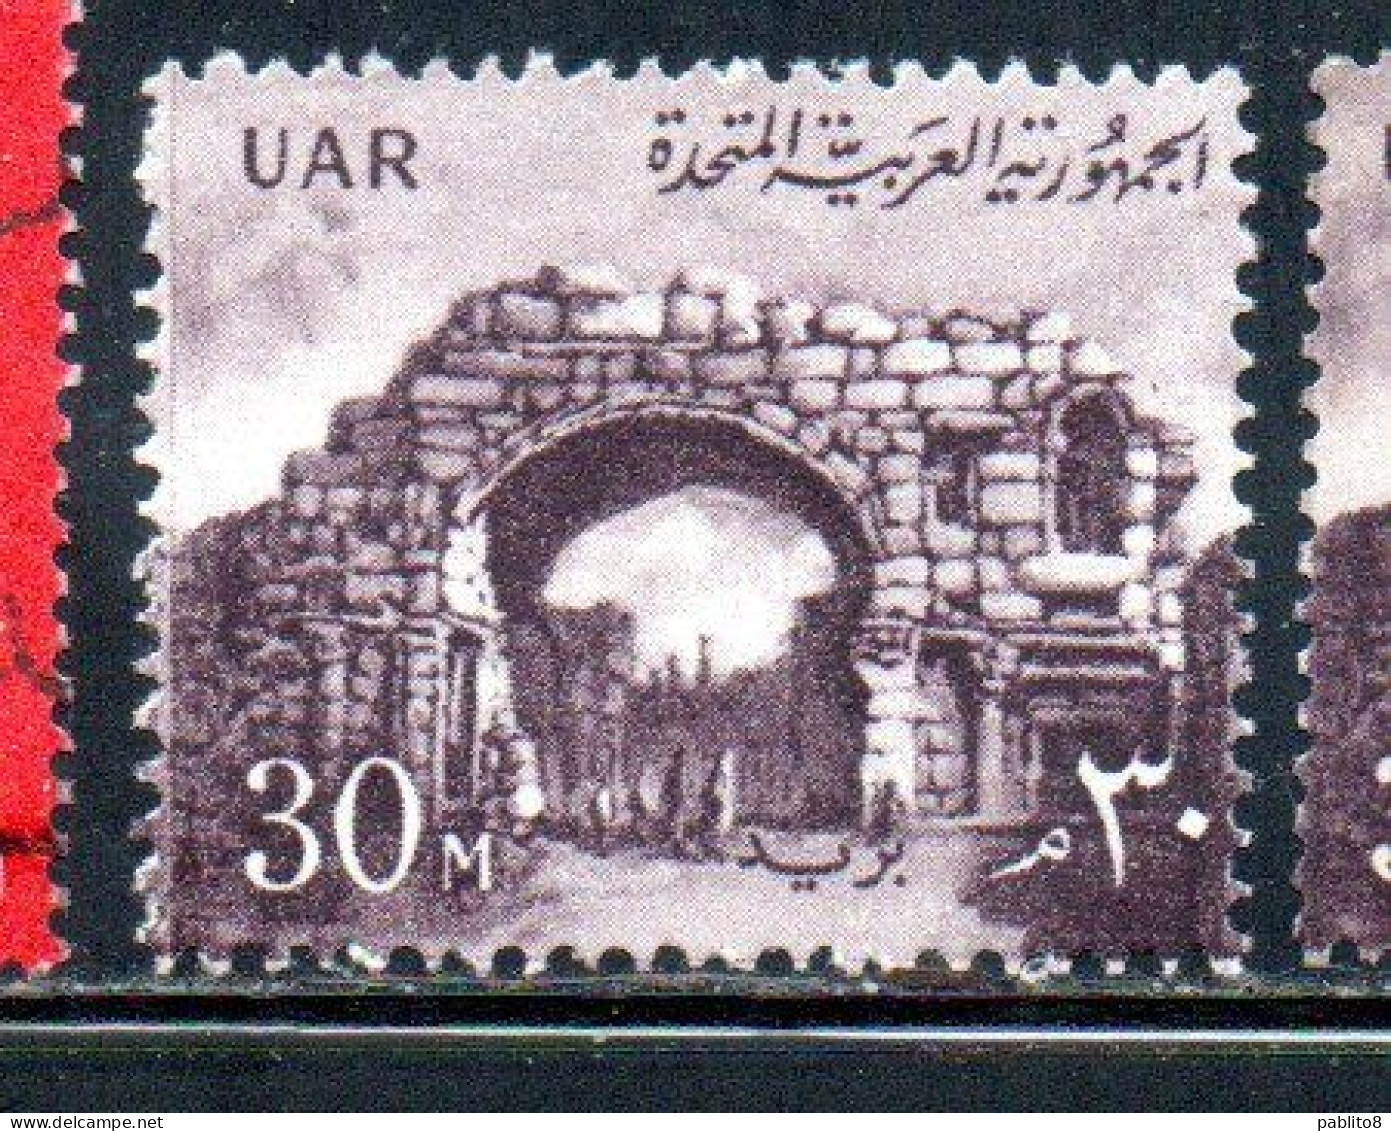 UAR EGYPT EGITTO 1959 1960 ST. SIMON'S GATE BOSRA SYRIA  30m MNH - Neufs